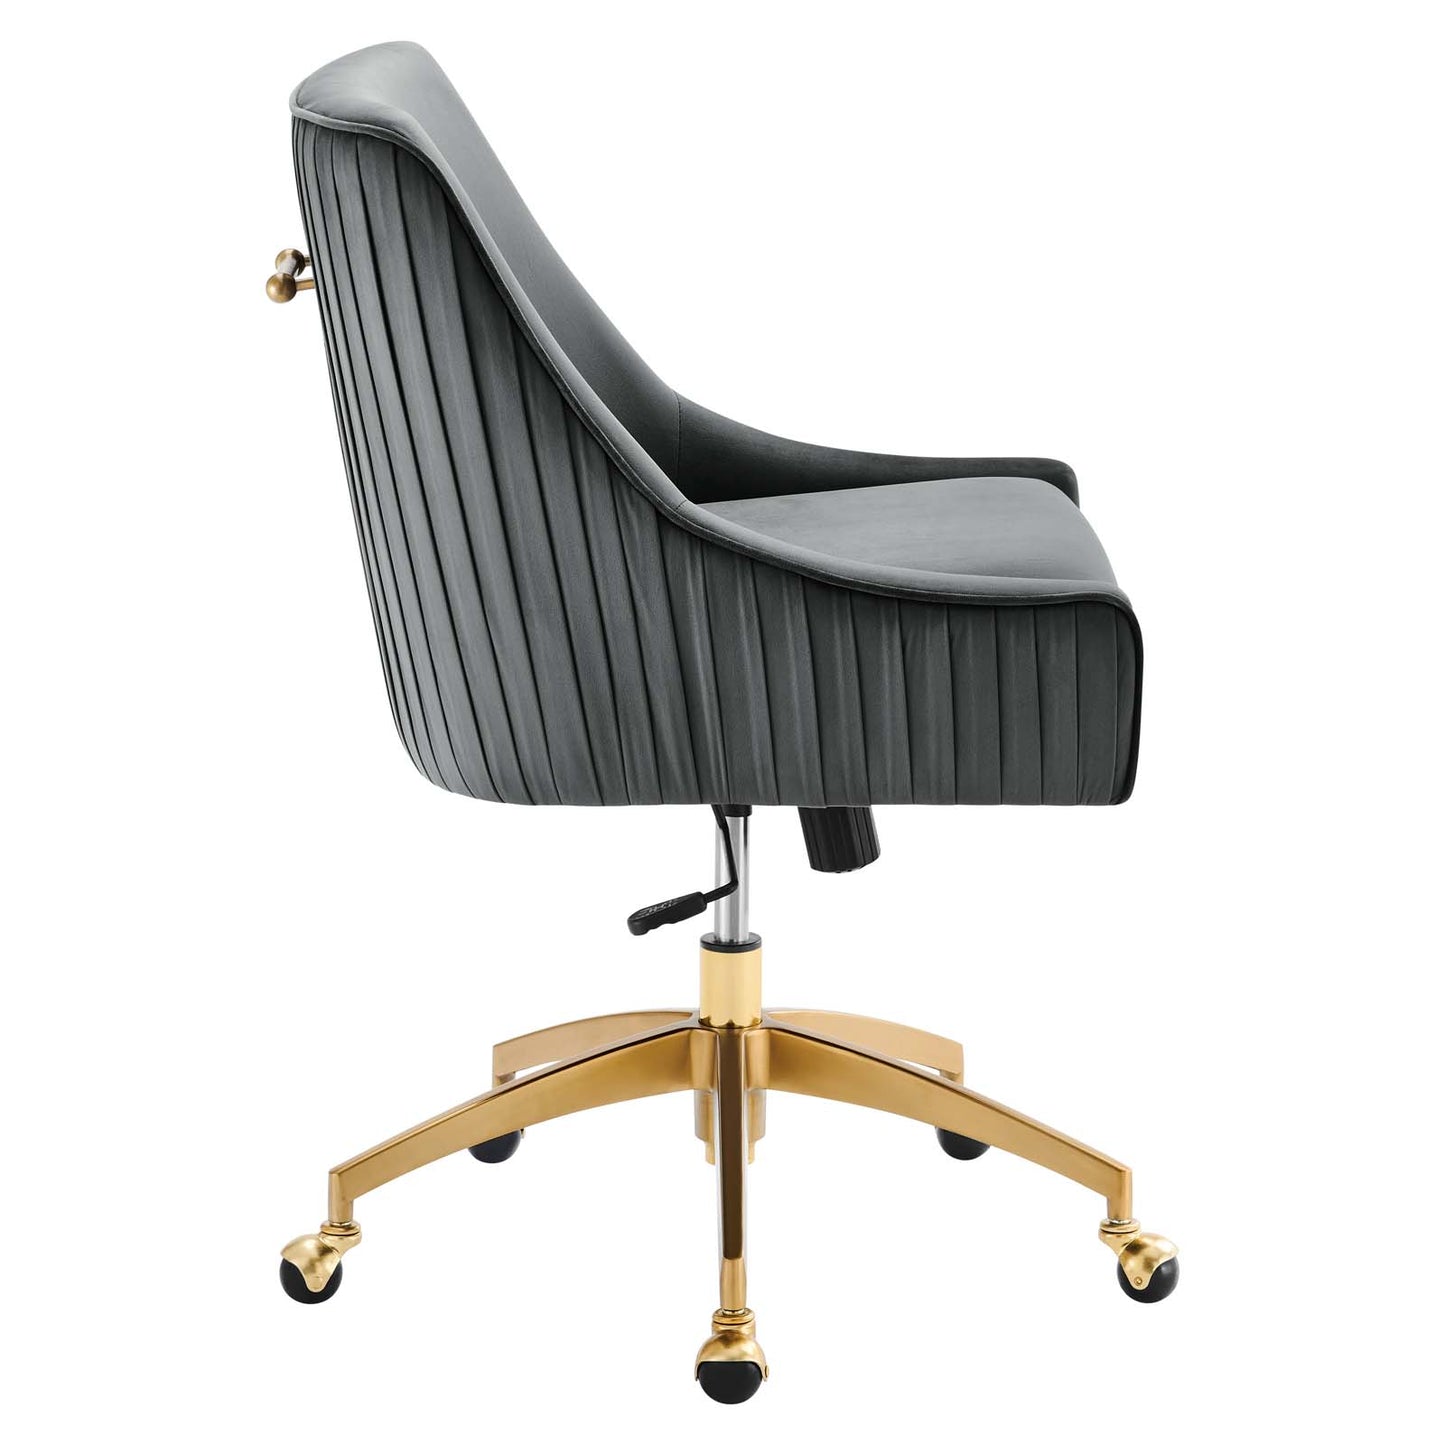 Discern Performance Velvet Office Chair Gray EEI-5080-GRY